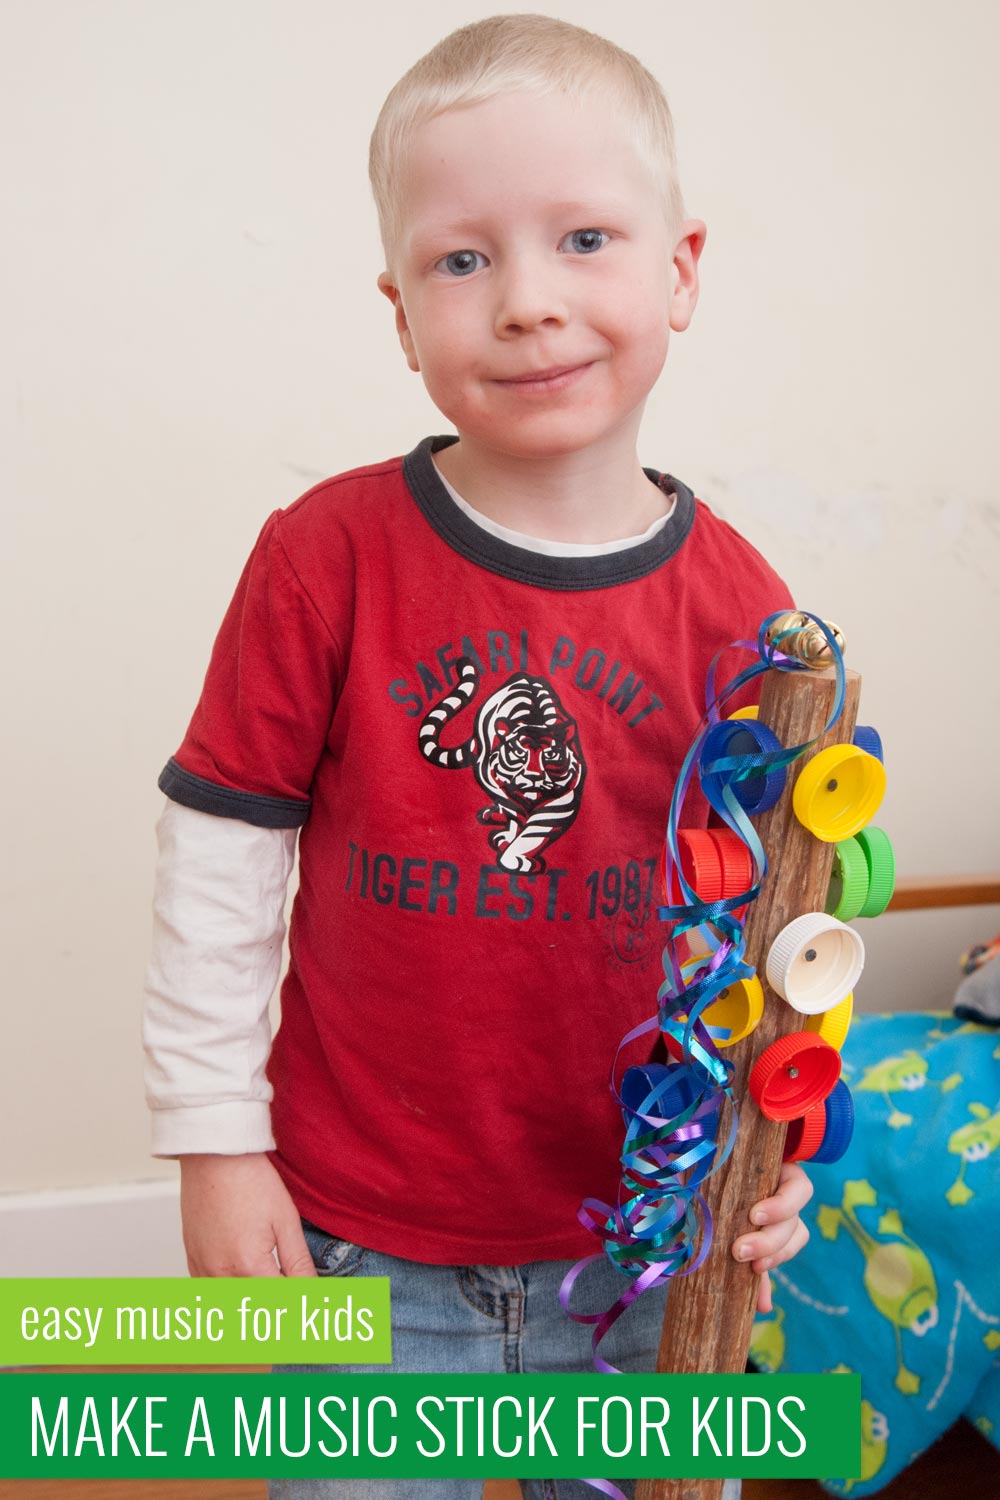 preschooler holding a homemade percussion instrument music stick